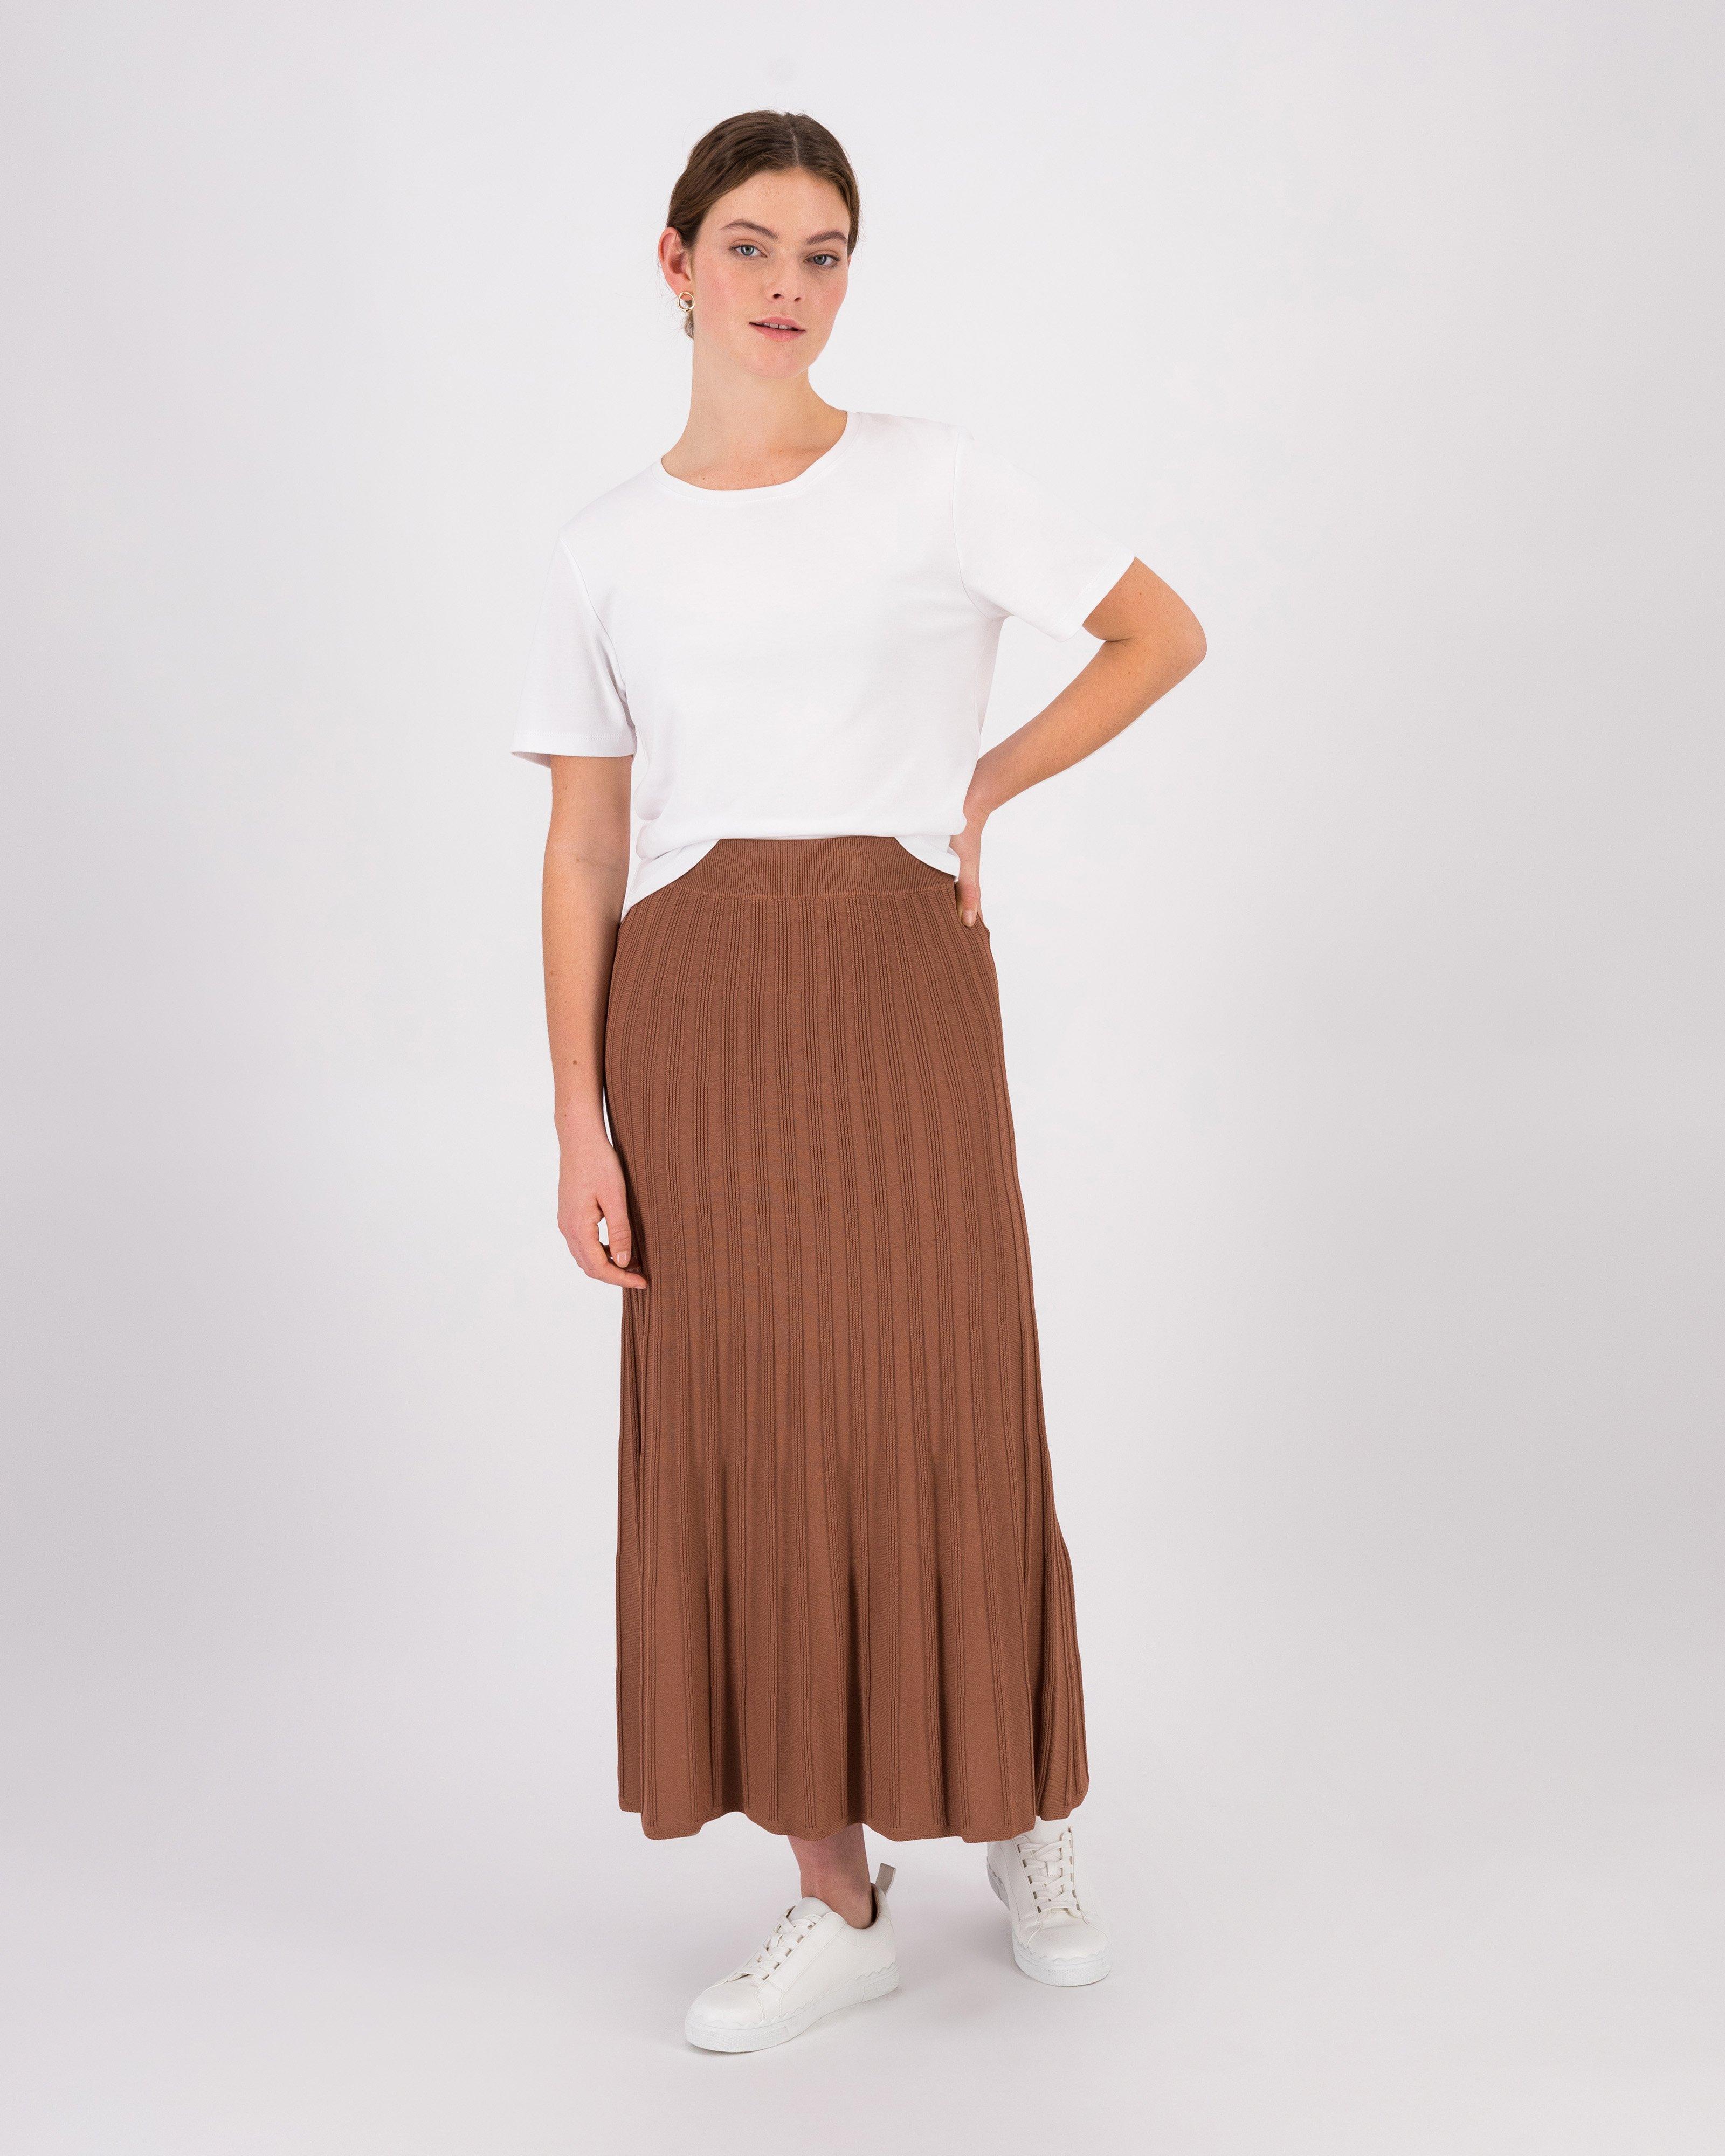 Zoya Knit Skirt - Poetry Clothing Store